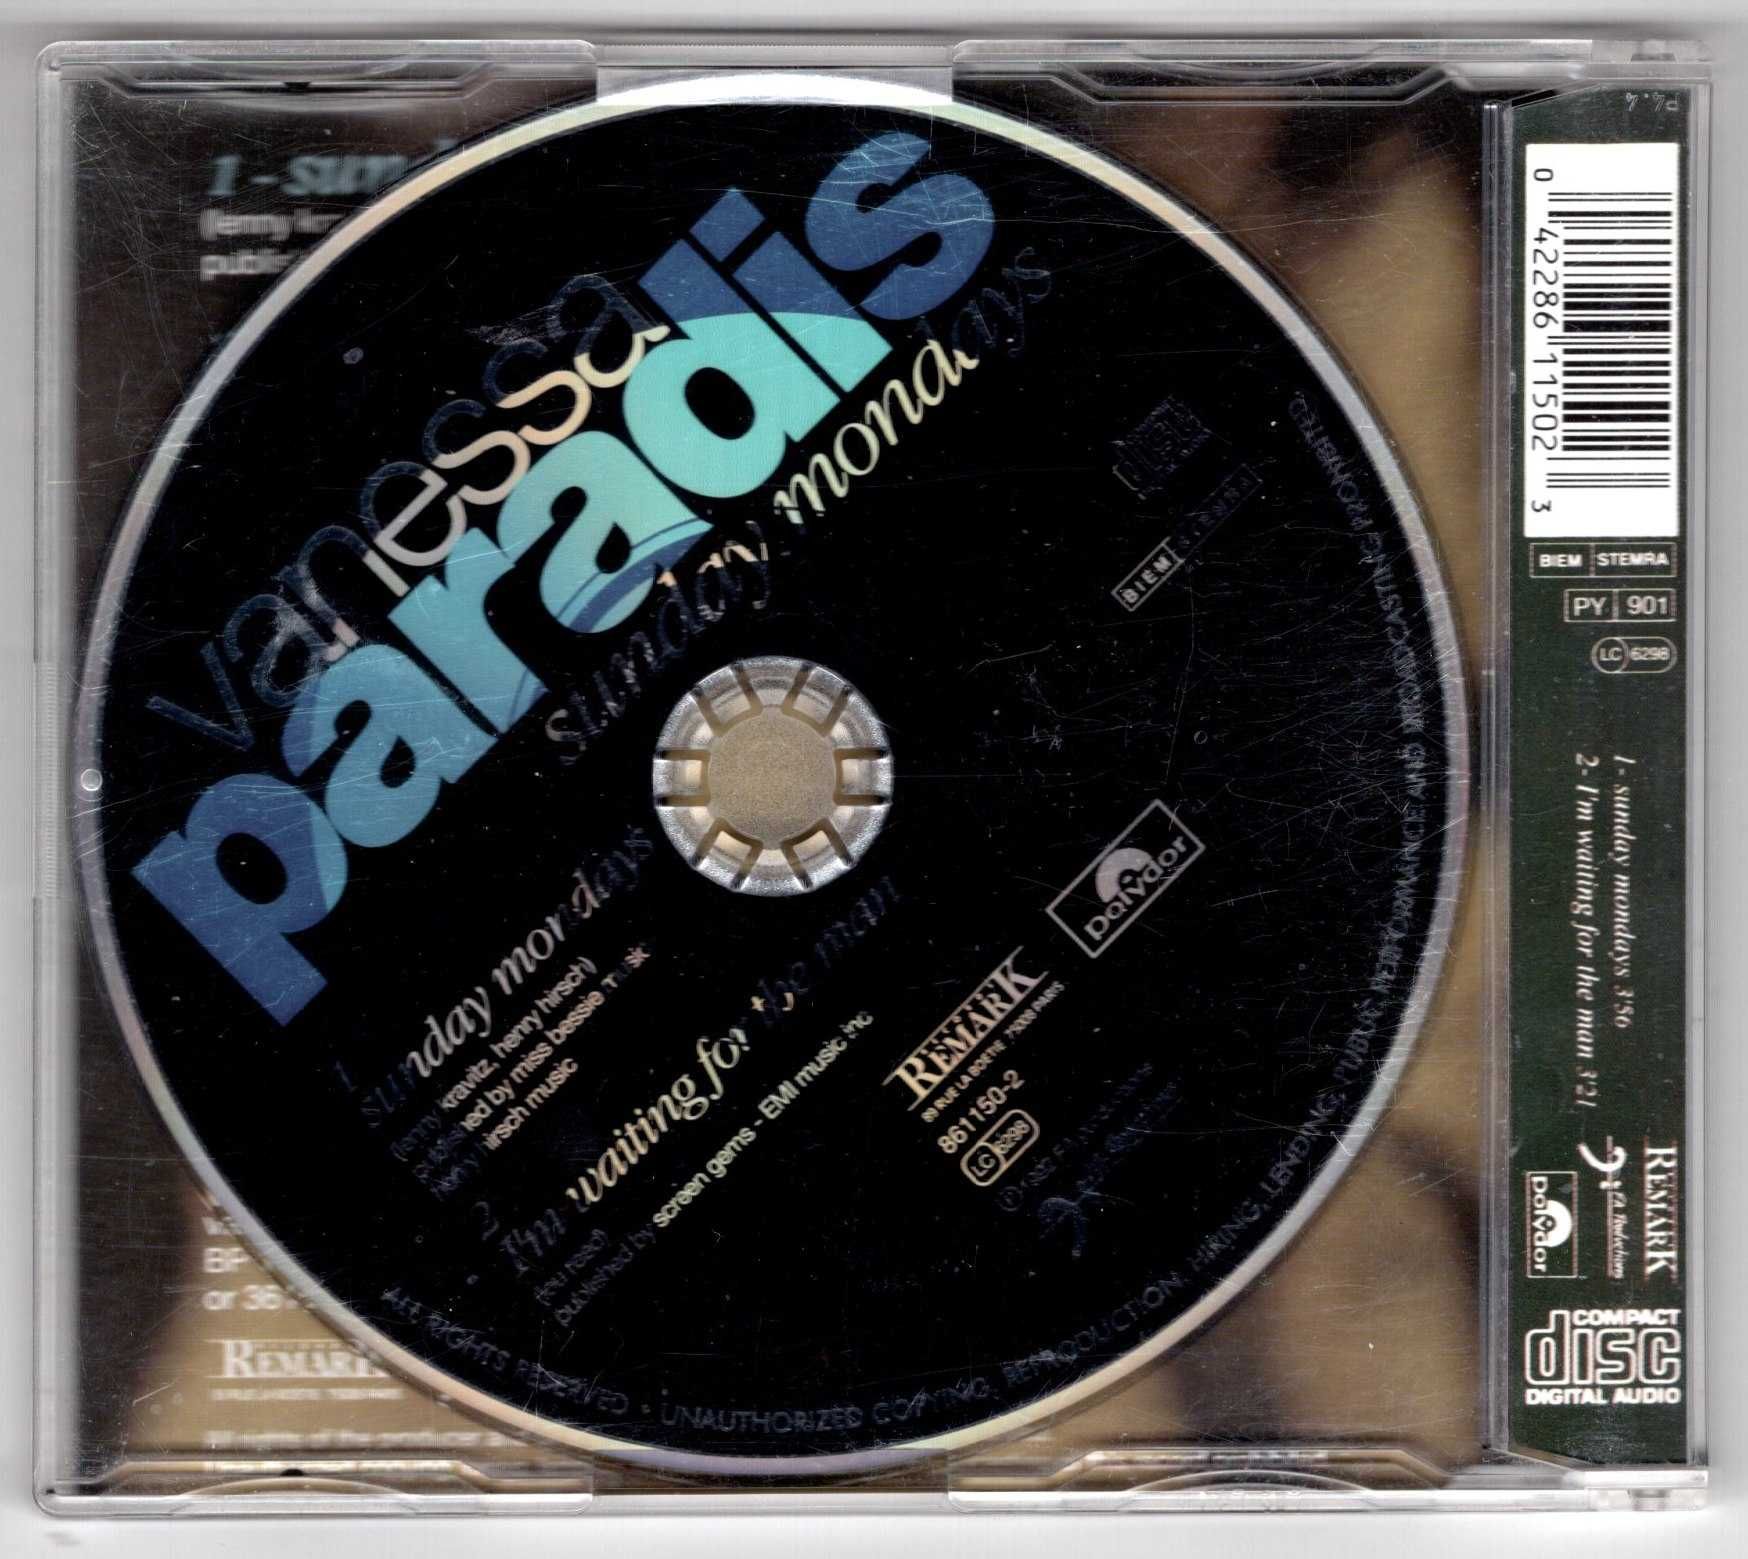 Vanessa Paradis - Sunday Mondays (CD, Singiel)